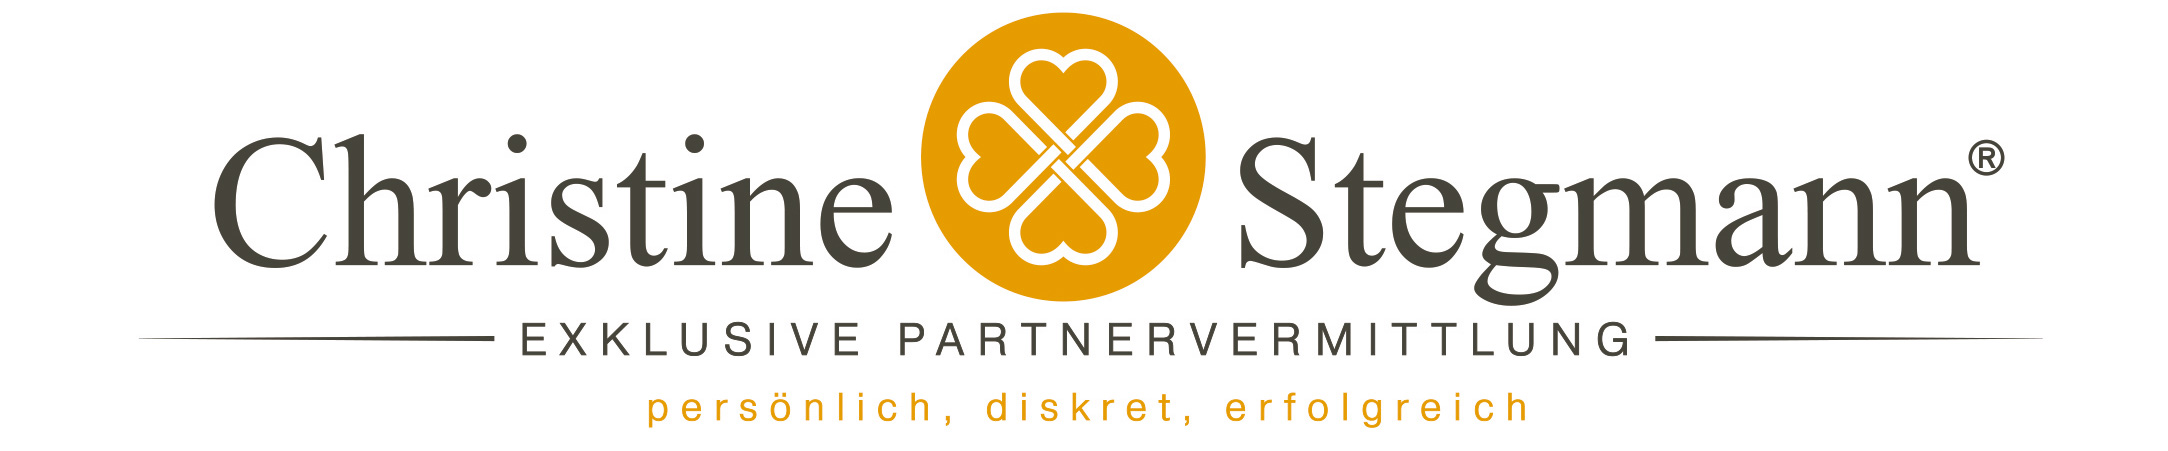 Christine Stegmann exklusive Partnervermittlung – Logo